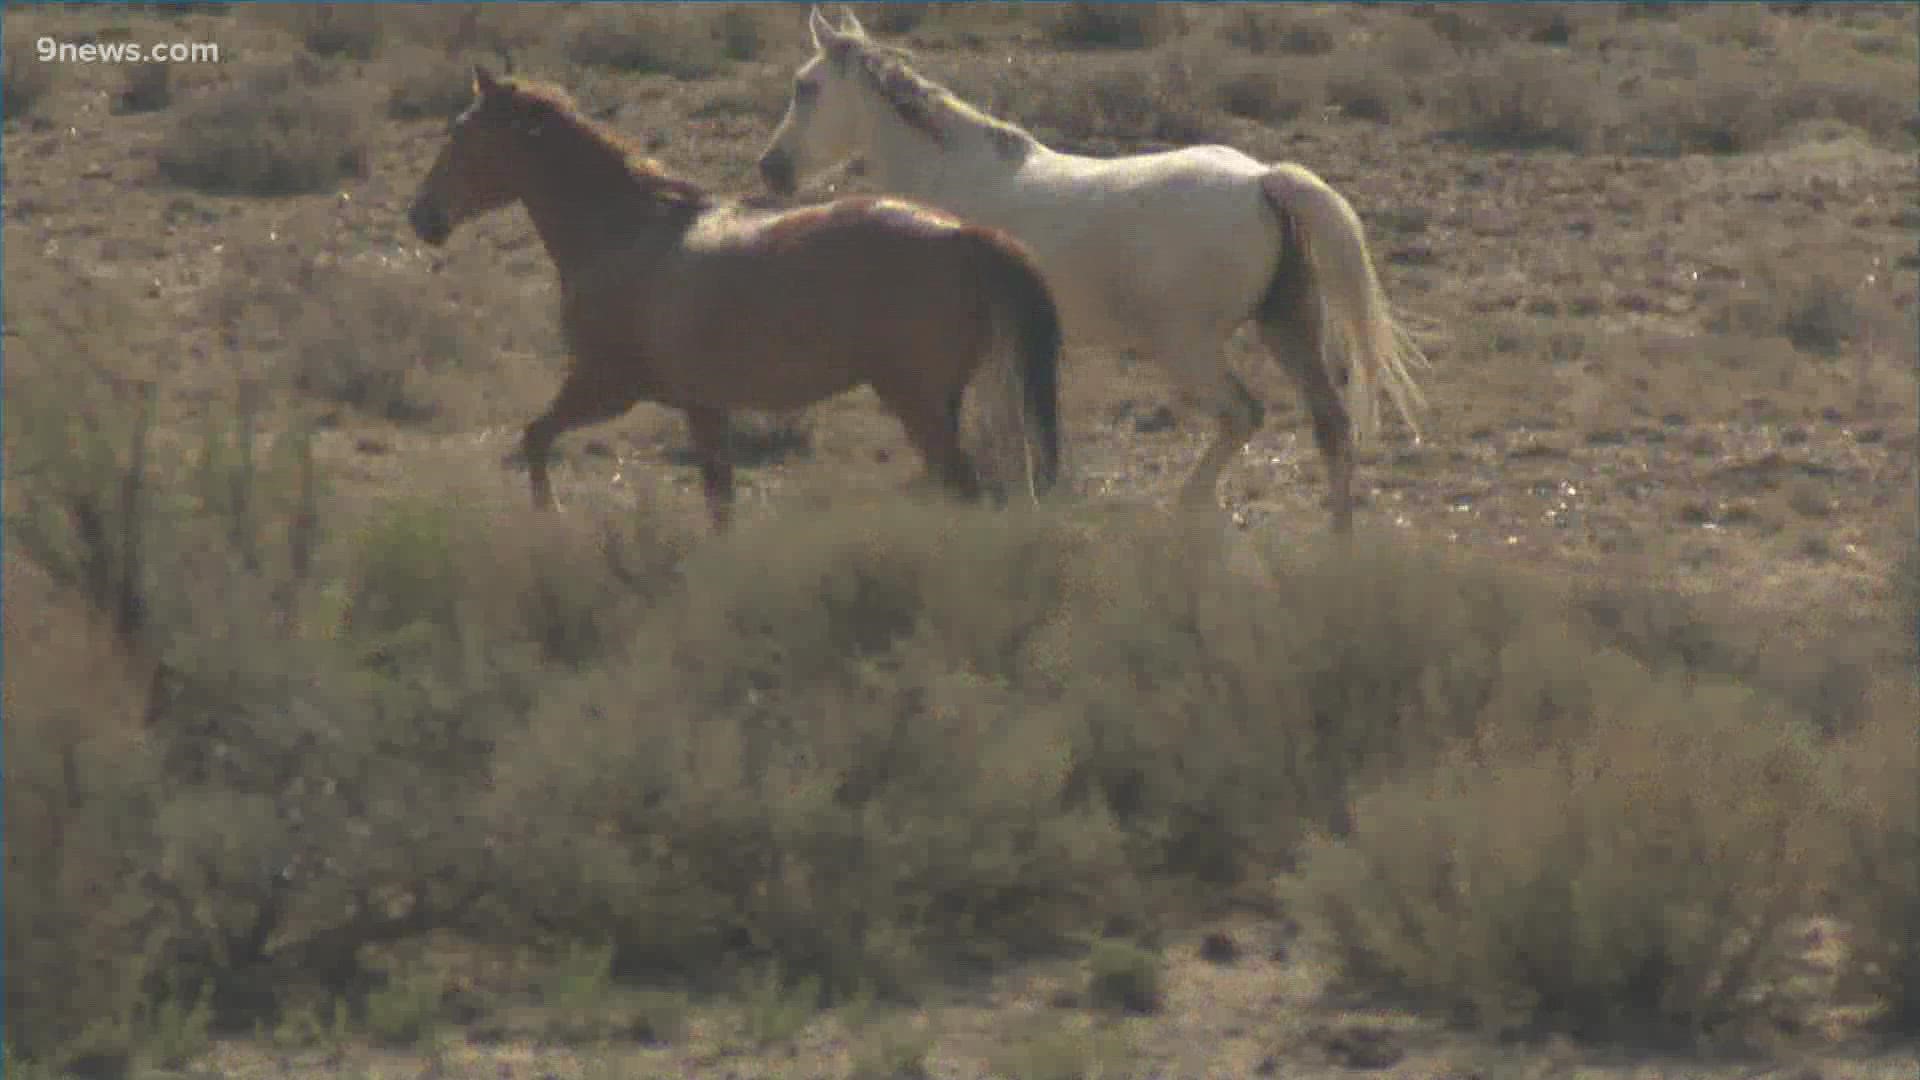 The Bureau of Land Management said they stopped gathering wild horses on Sept. 8